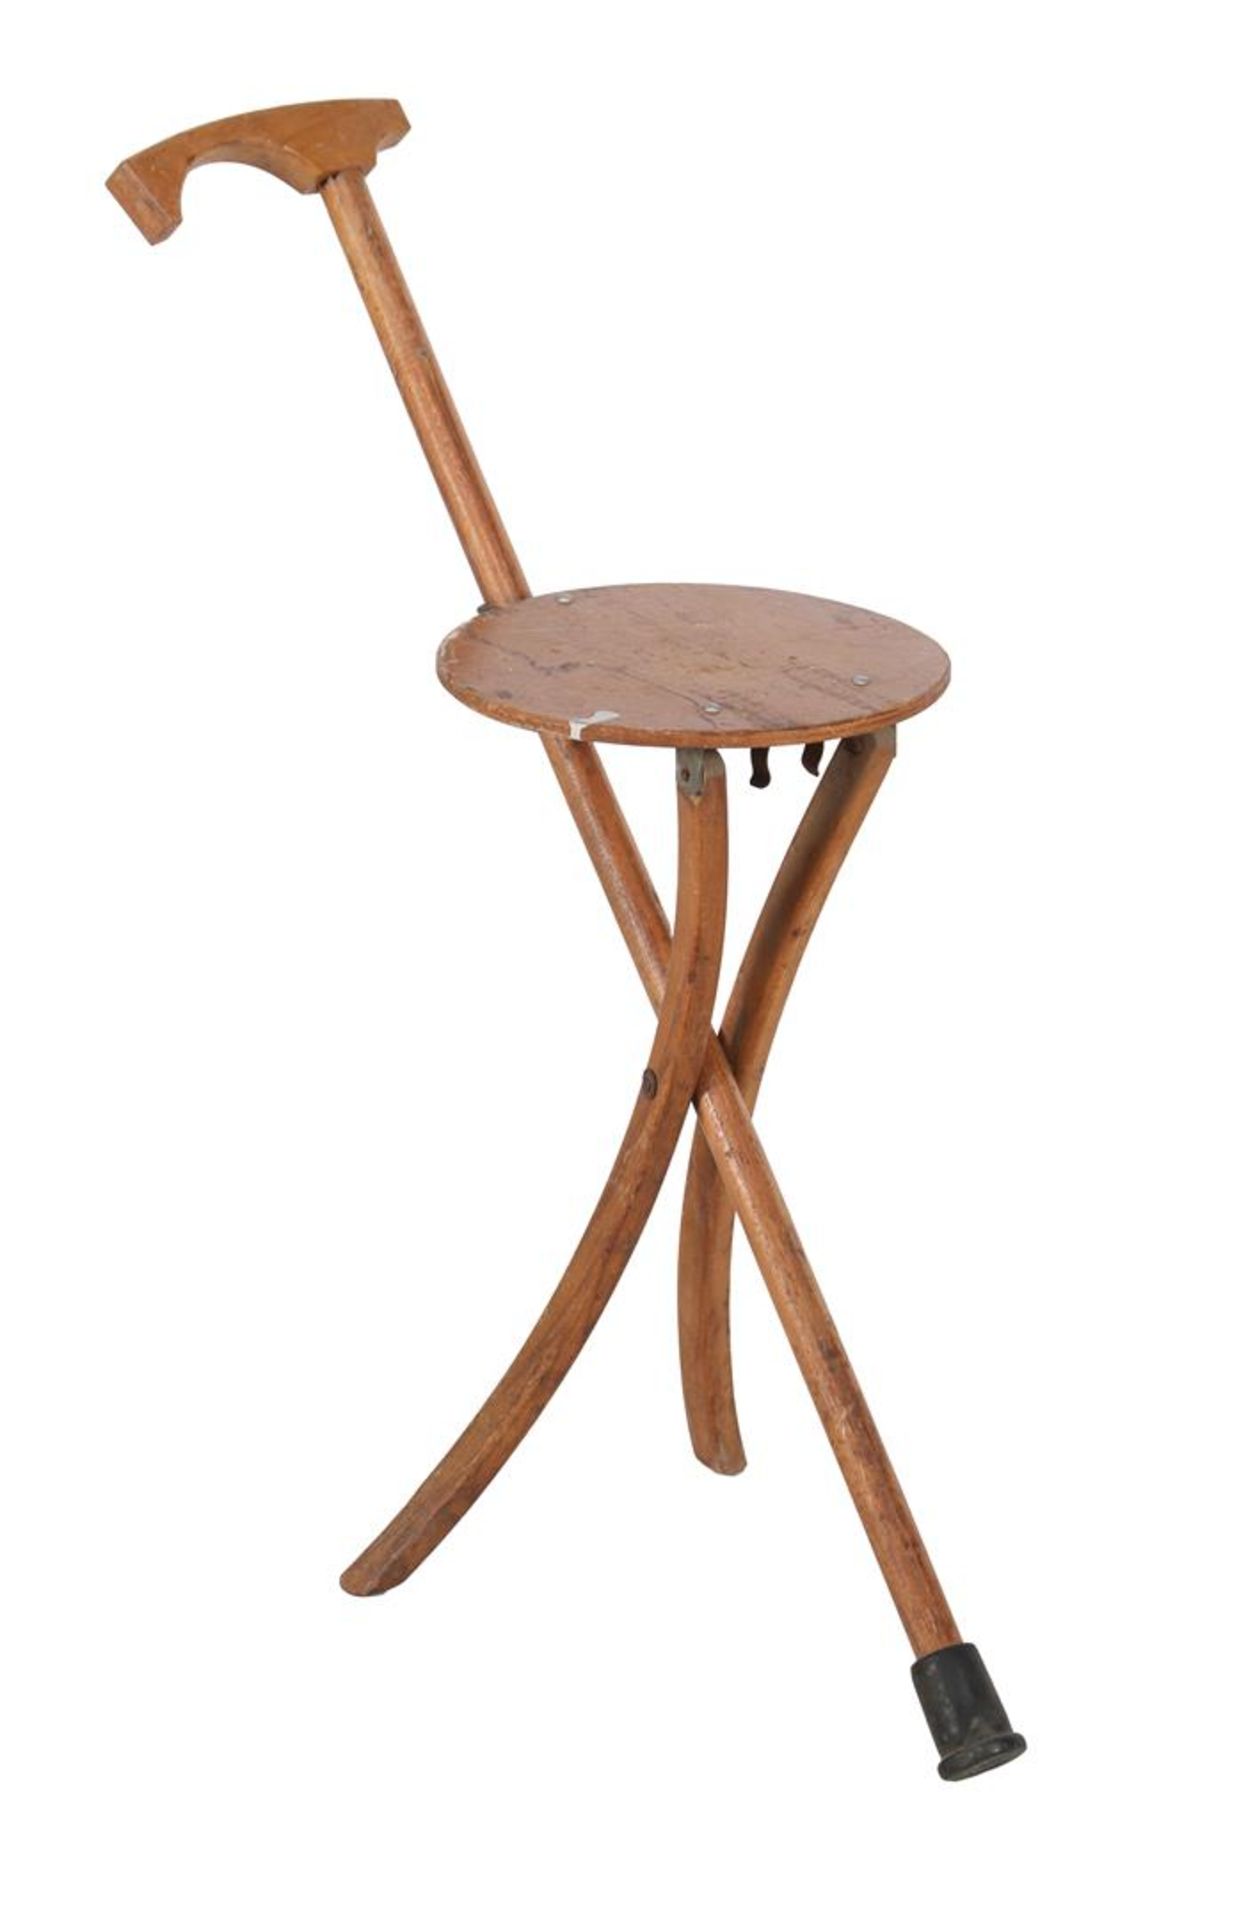 Beech folding stool/walking stick